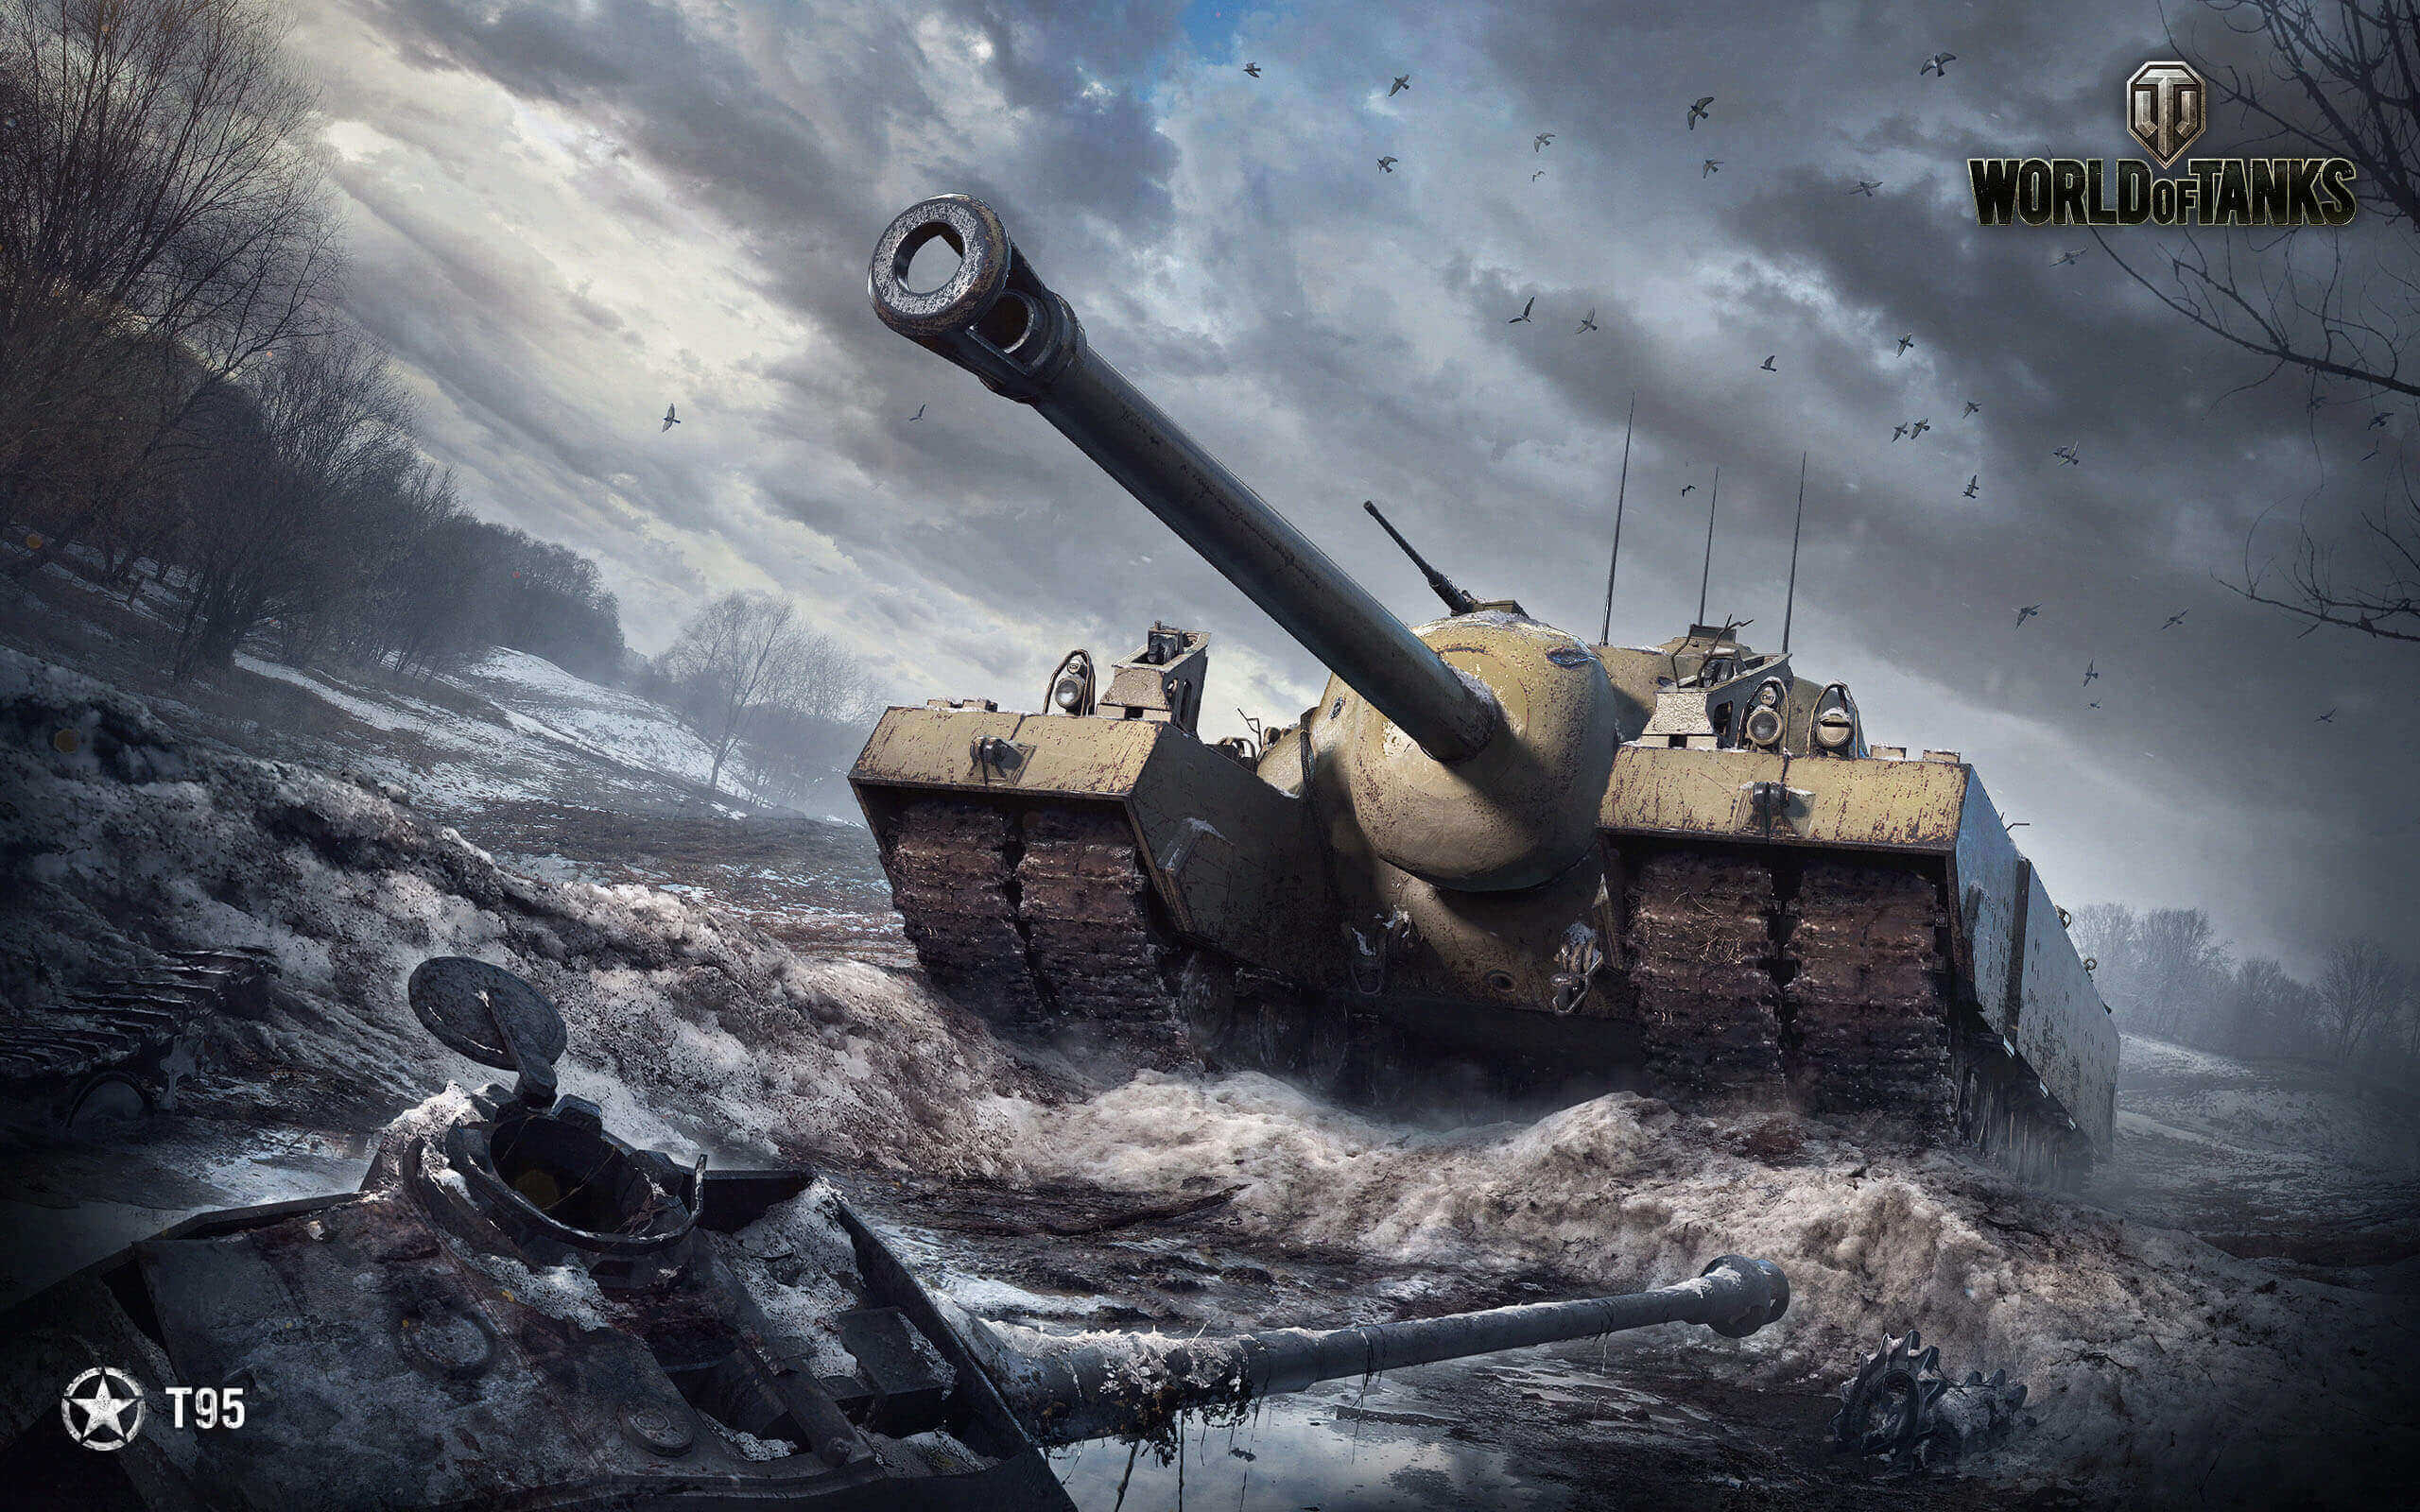 Wallpaper Wallpaper world of tanks t54 wot t54 images for desktop  section игры  download